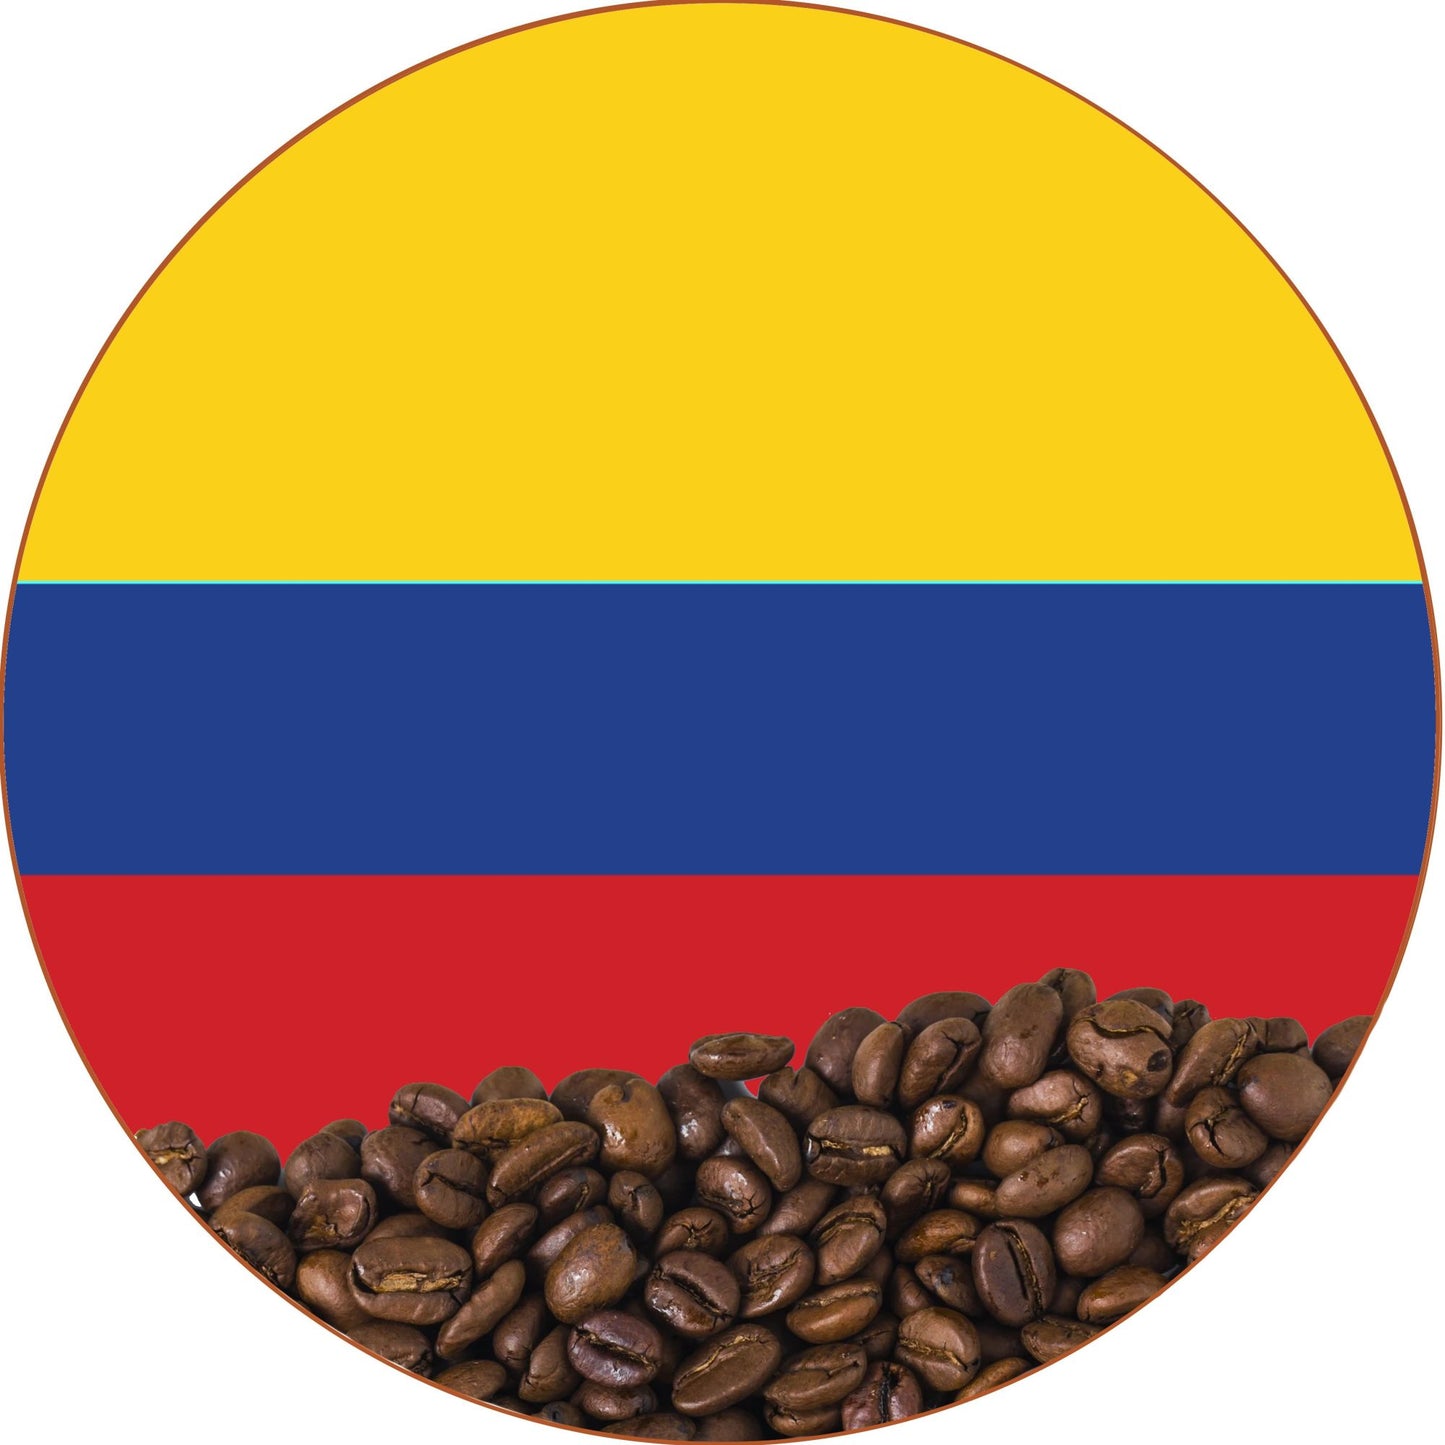 Colombia - Artesian, Small Batch, Whole Bean Coffee